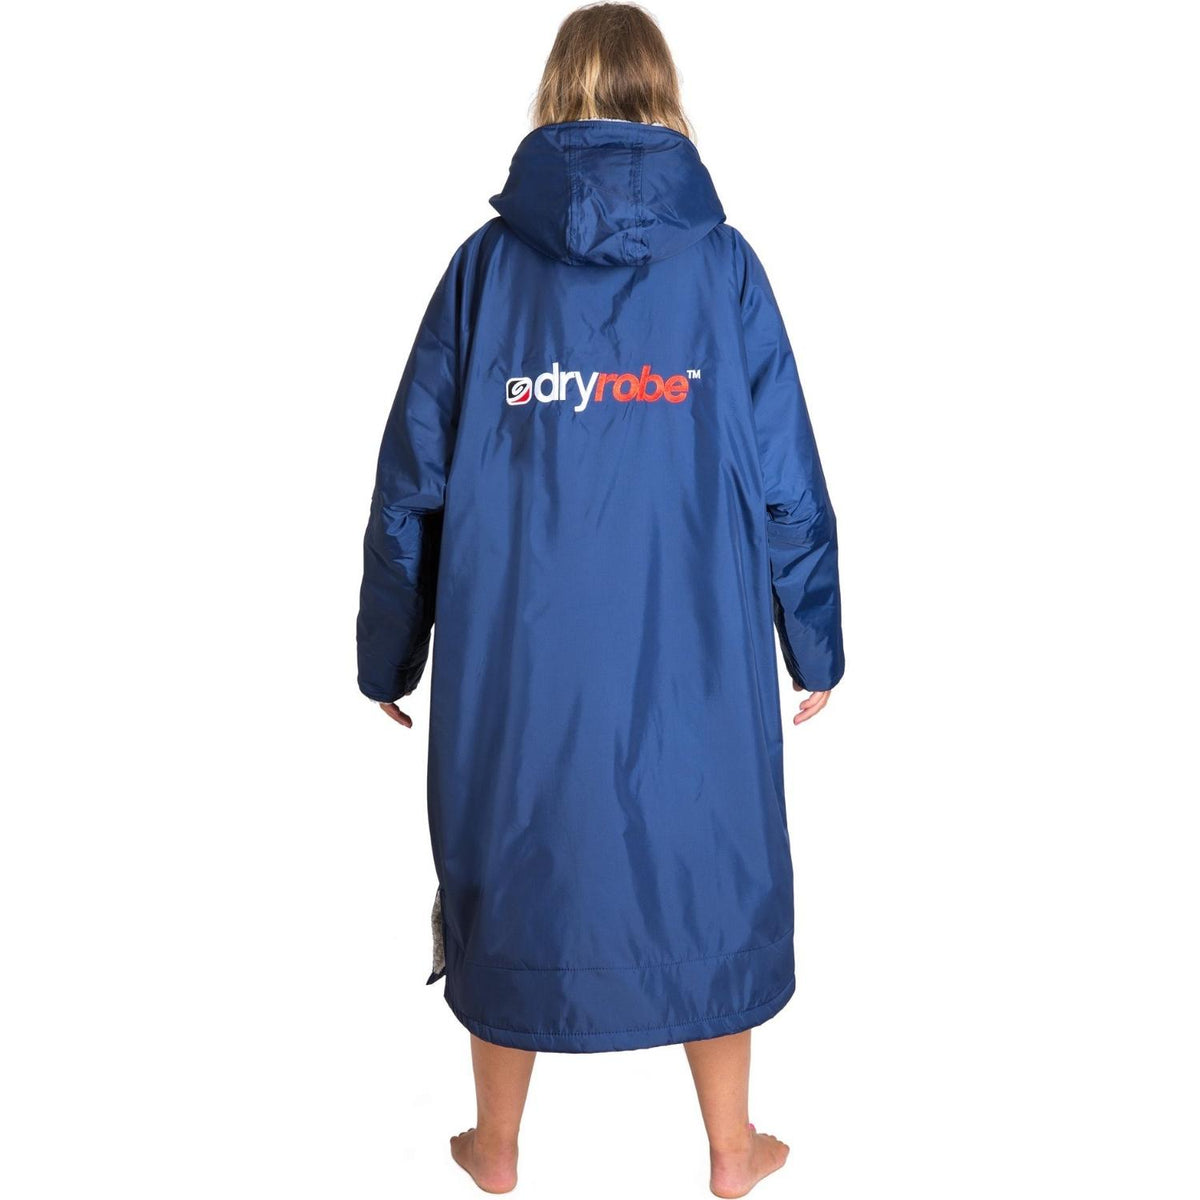 Dryrobe Advance Long Sleeve Drying &amp; Changing Robe - Navy Blue/Grey - Changing Robe Poncho Towel by Dryrobe